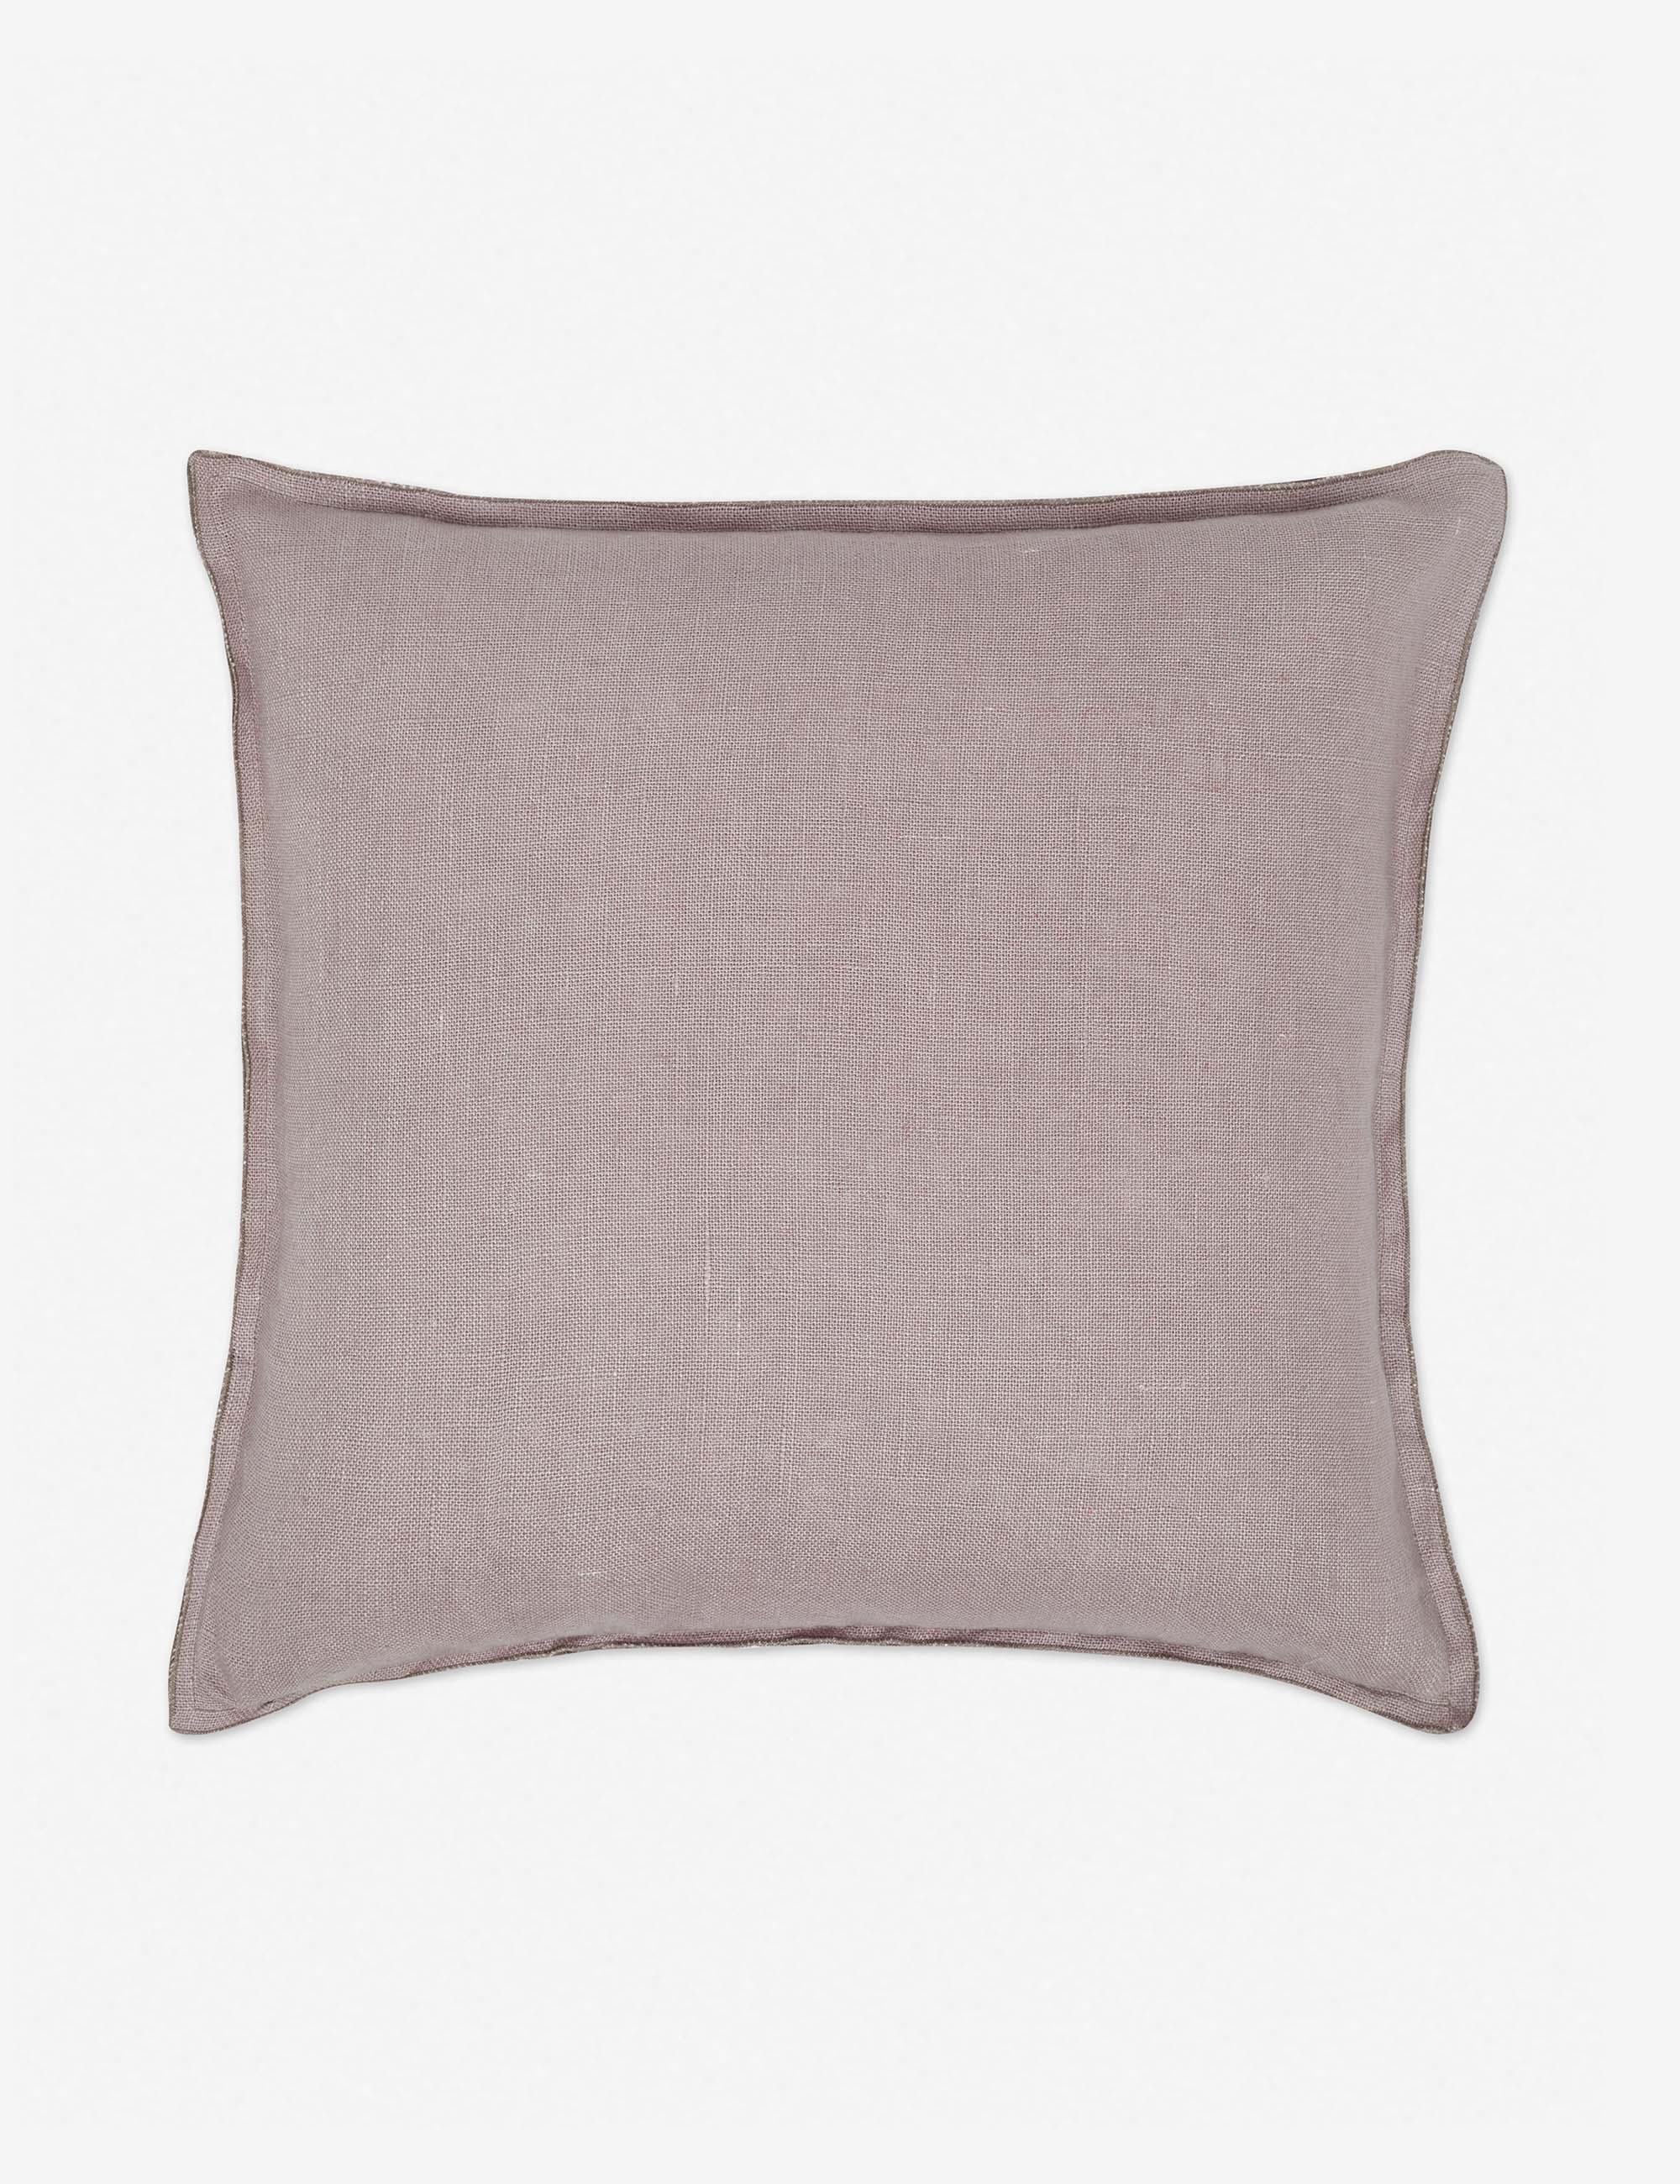 Arlo Linen Pillow, Dark Natural - Image 0